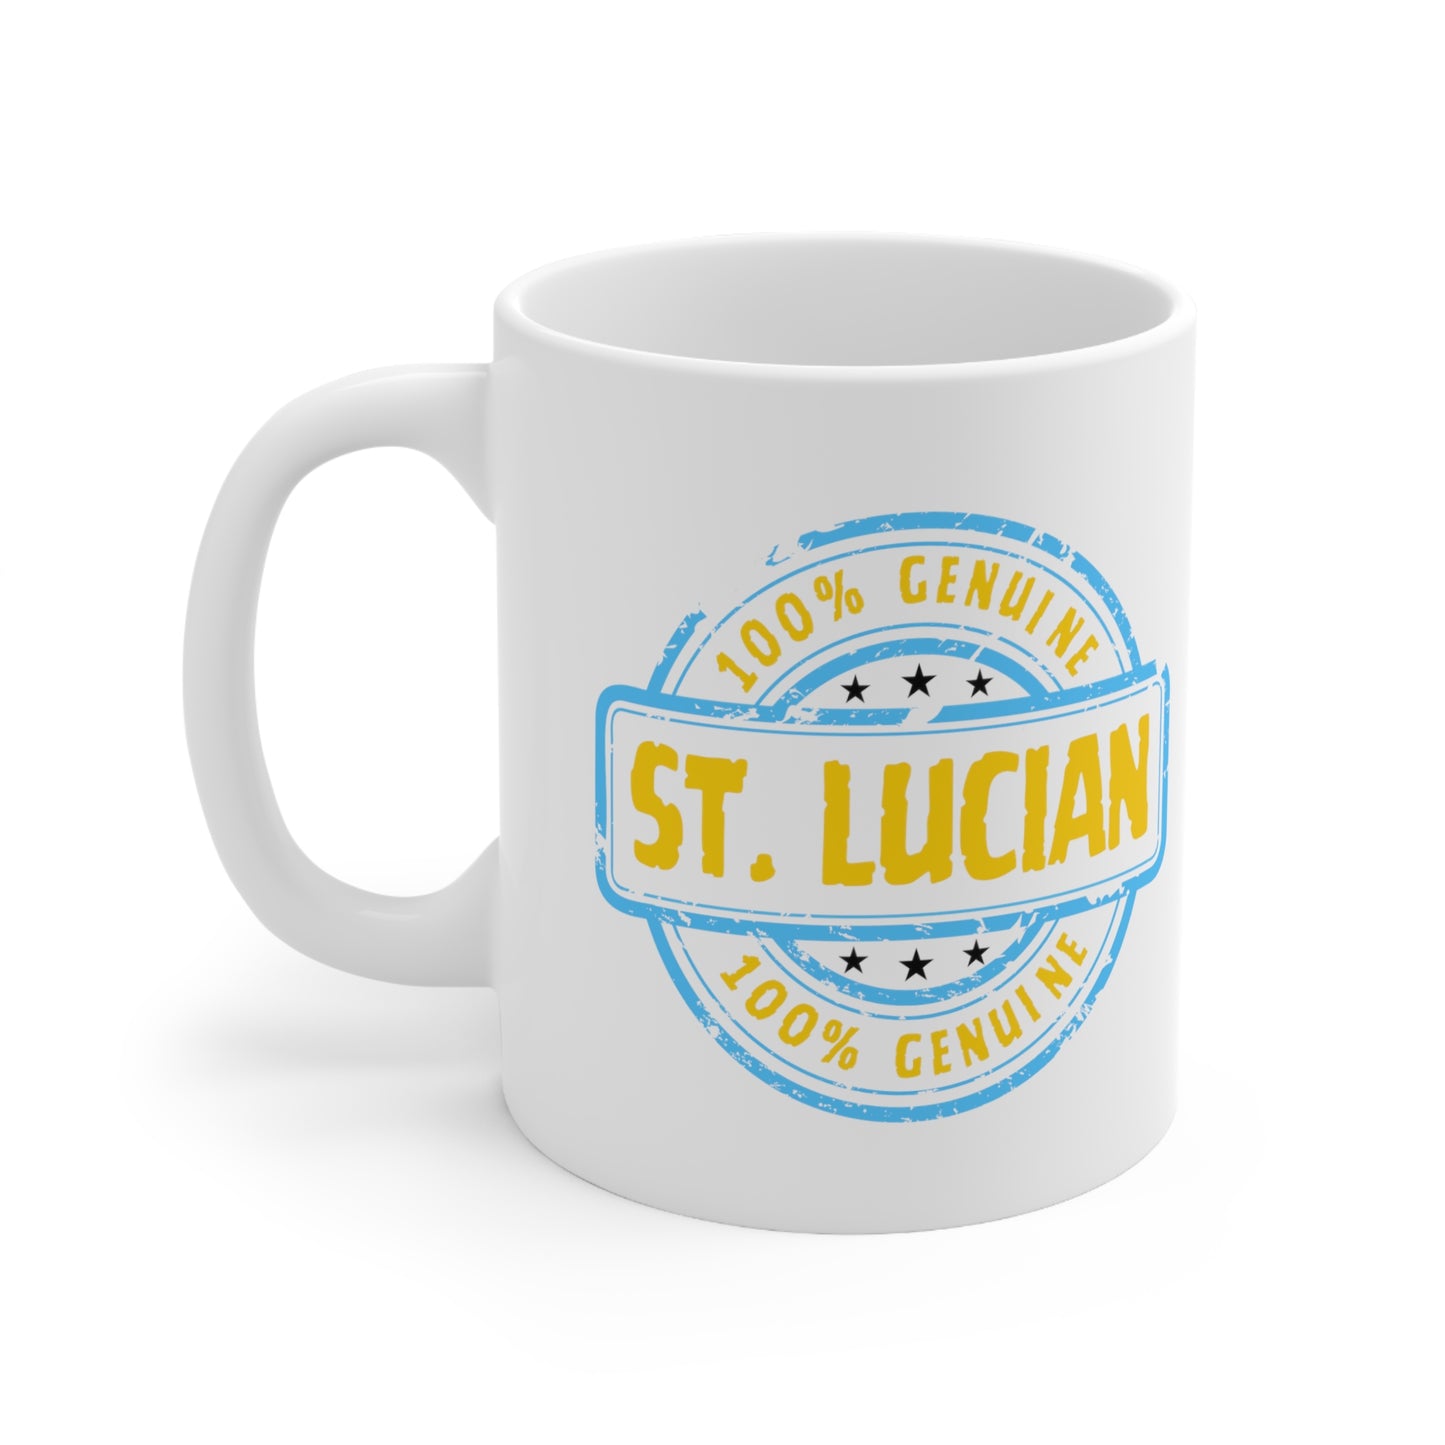 Saint Lucian Stamp Ceramic Mug 11oz